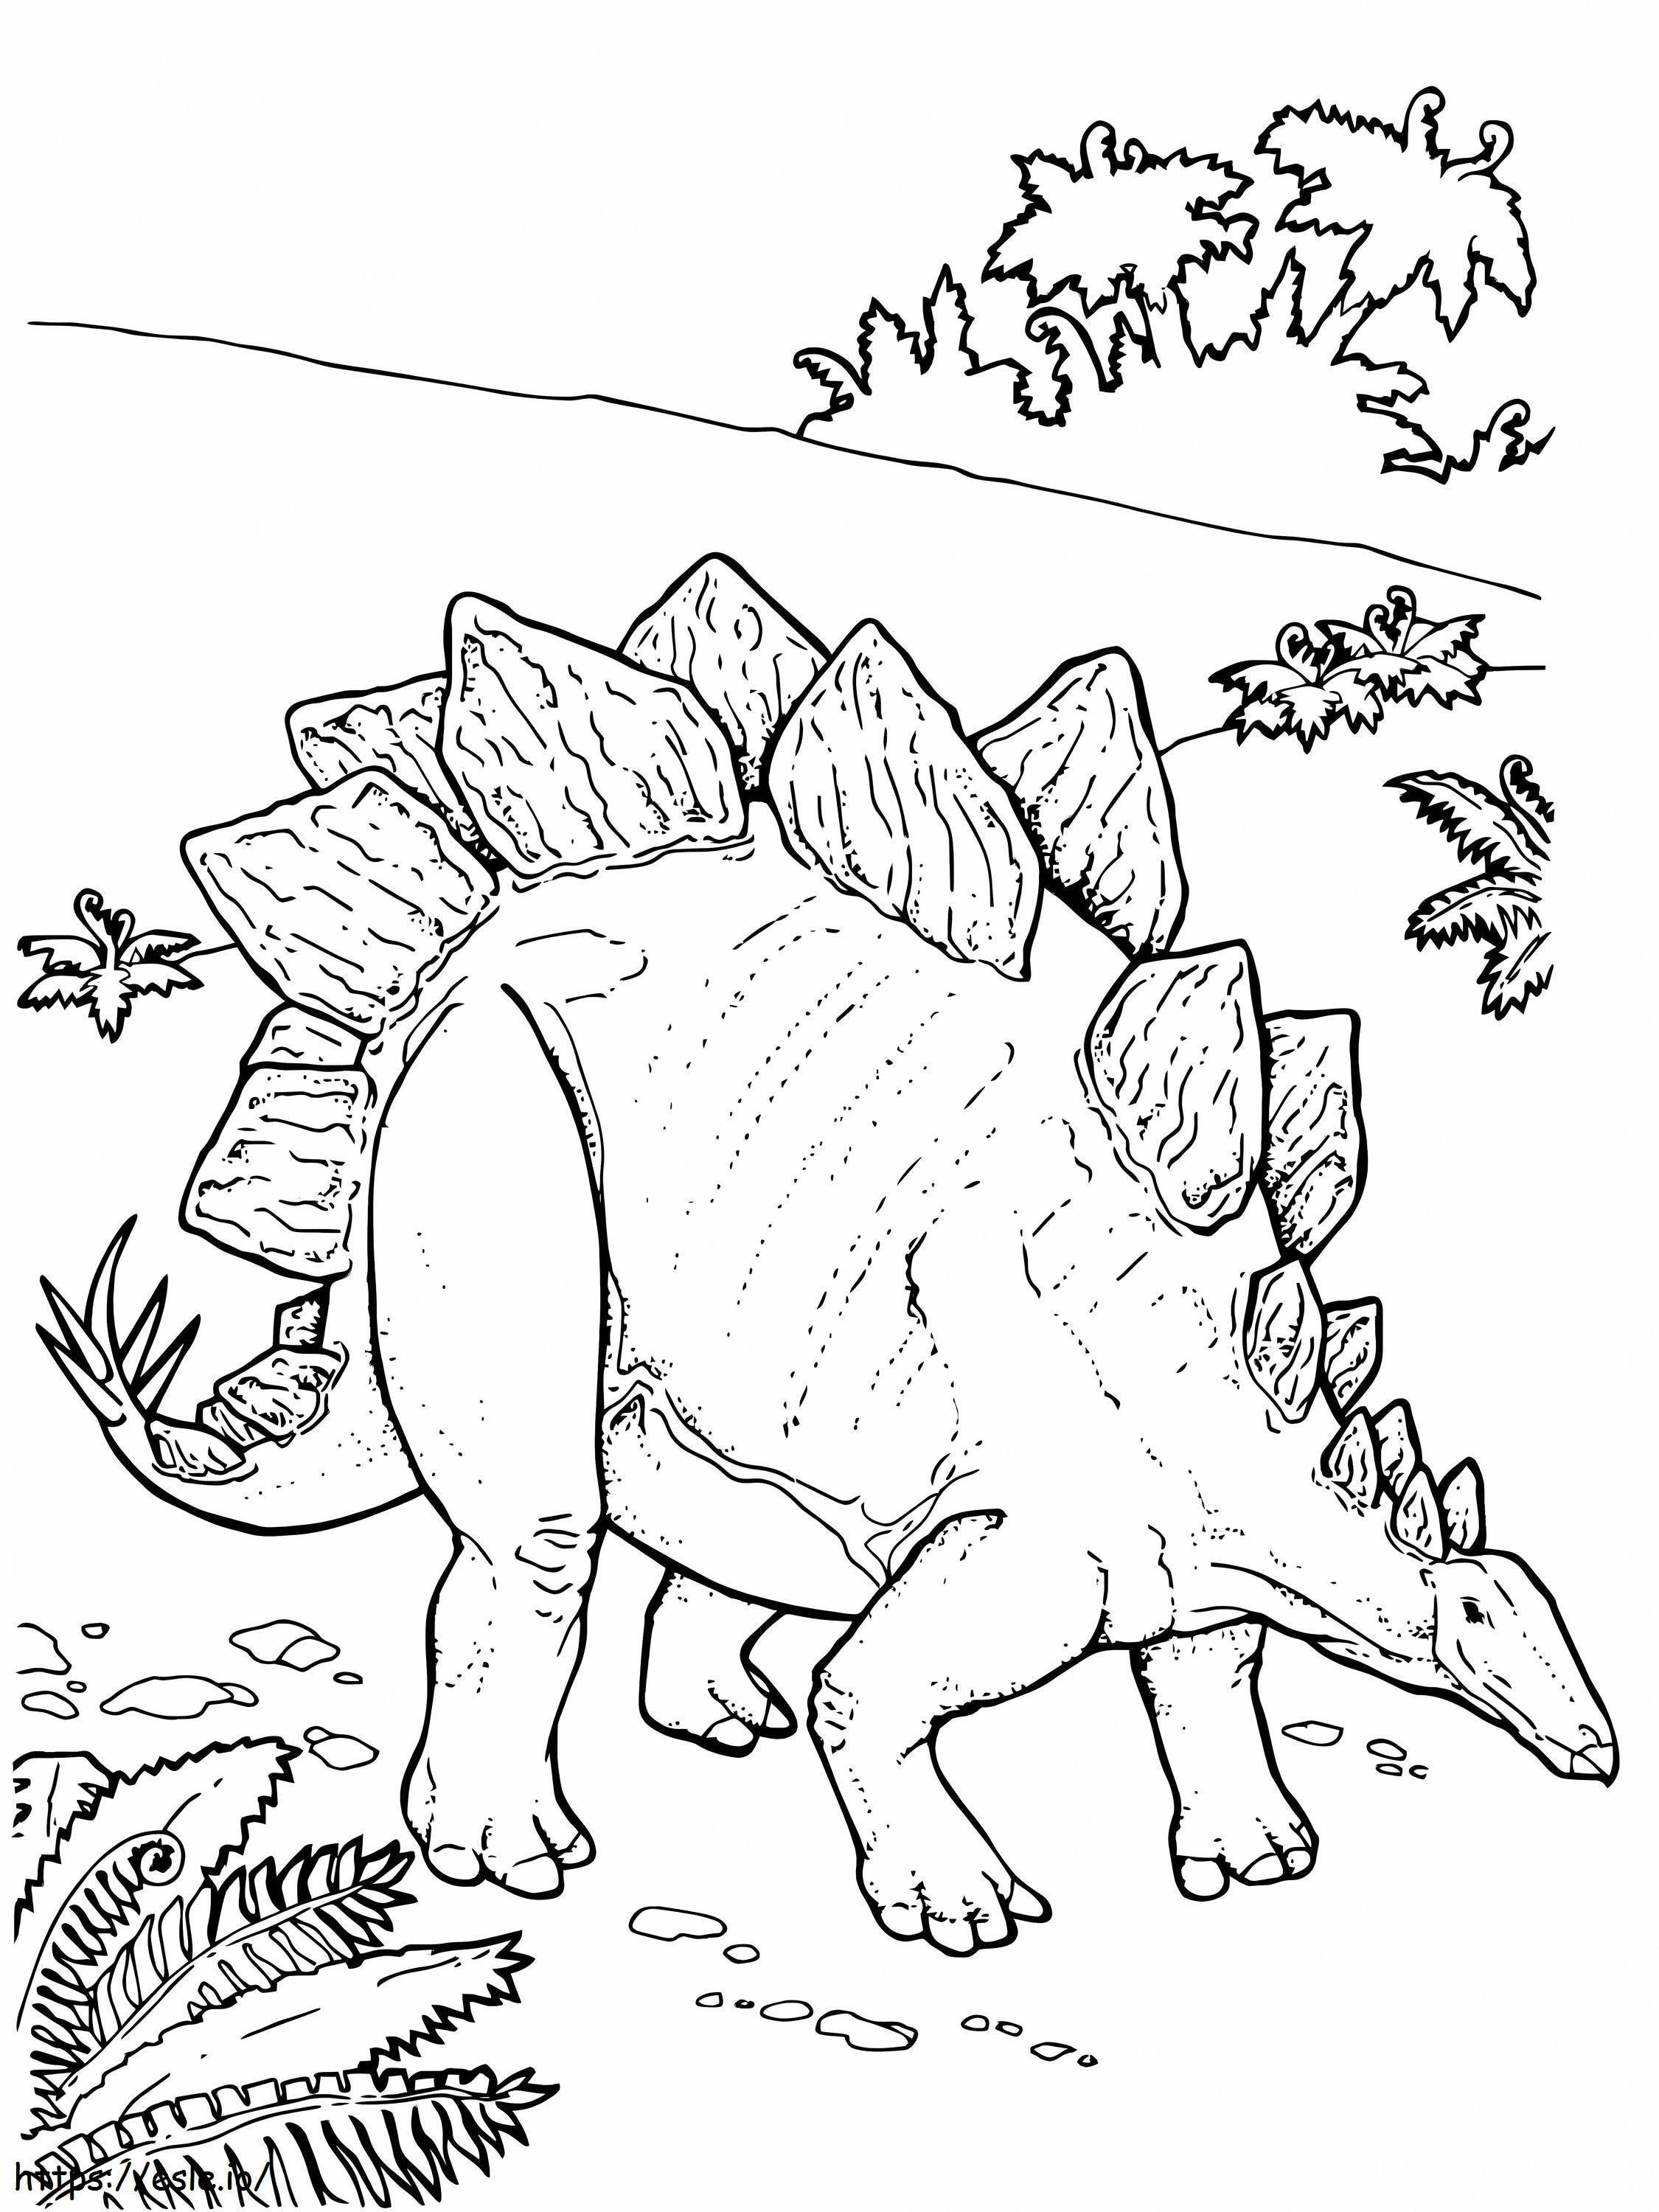 Stegosaurus Armored Dinosaur coloring page